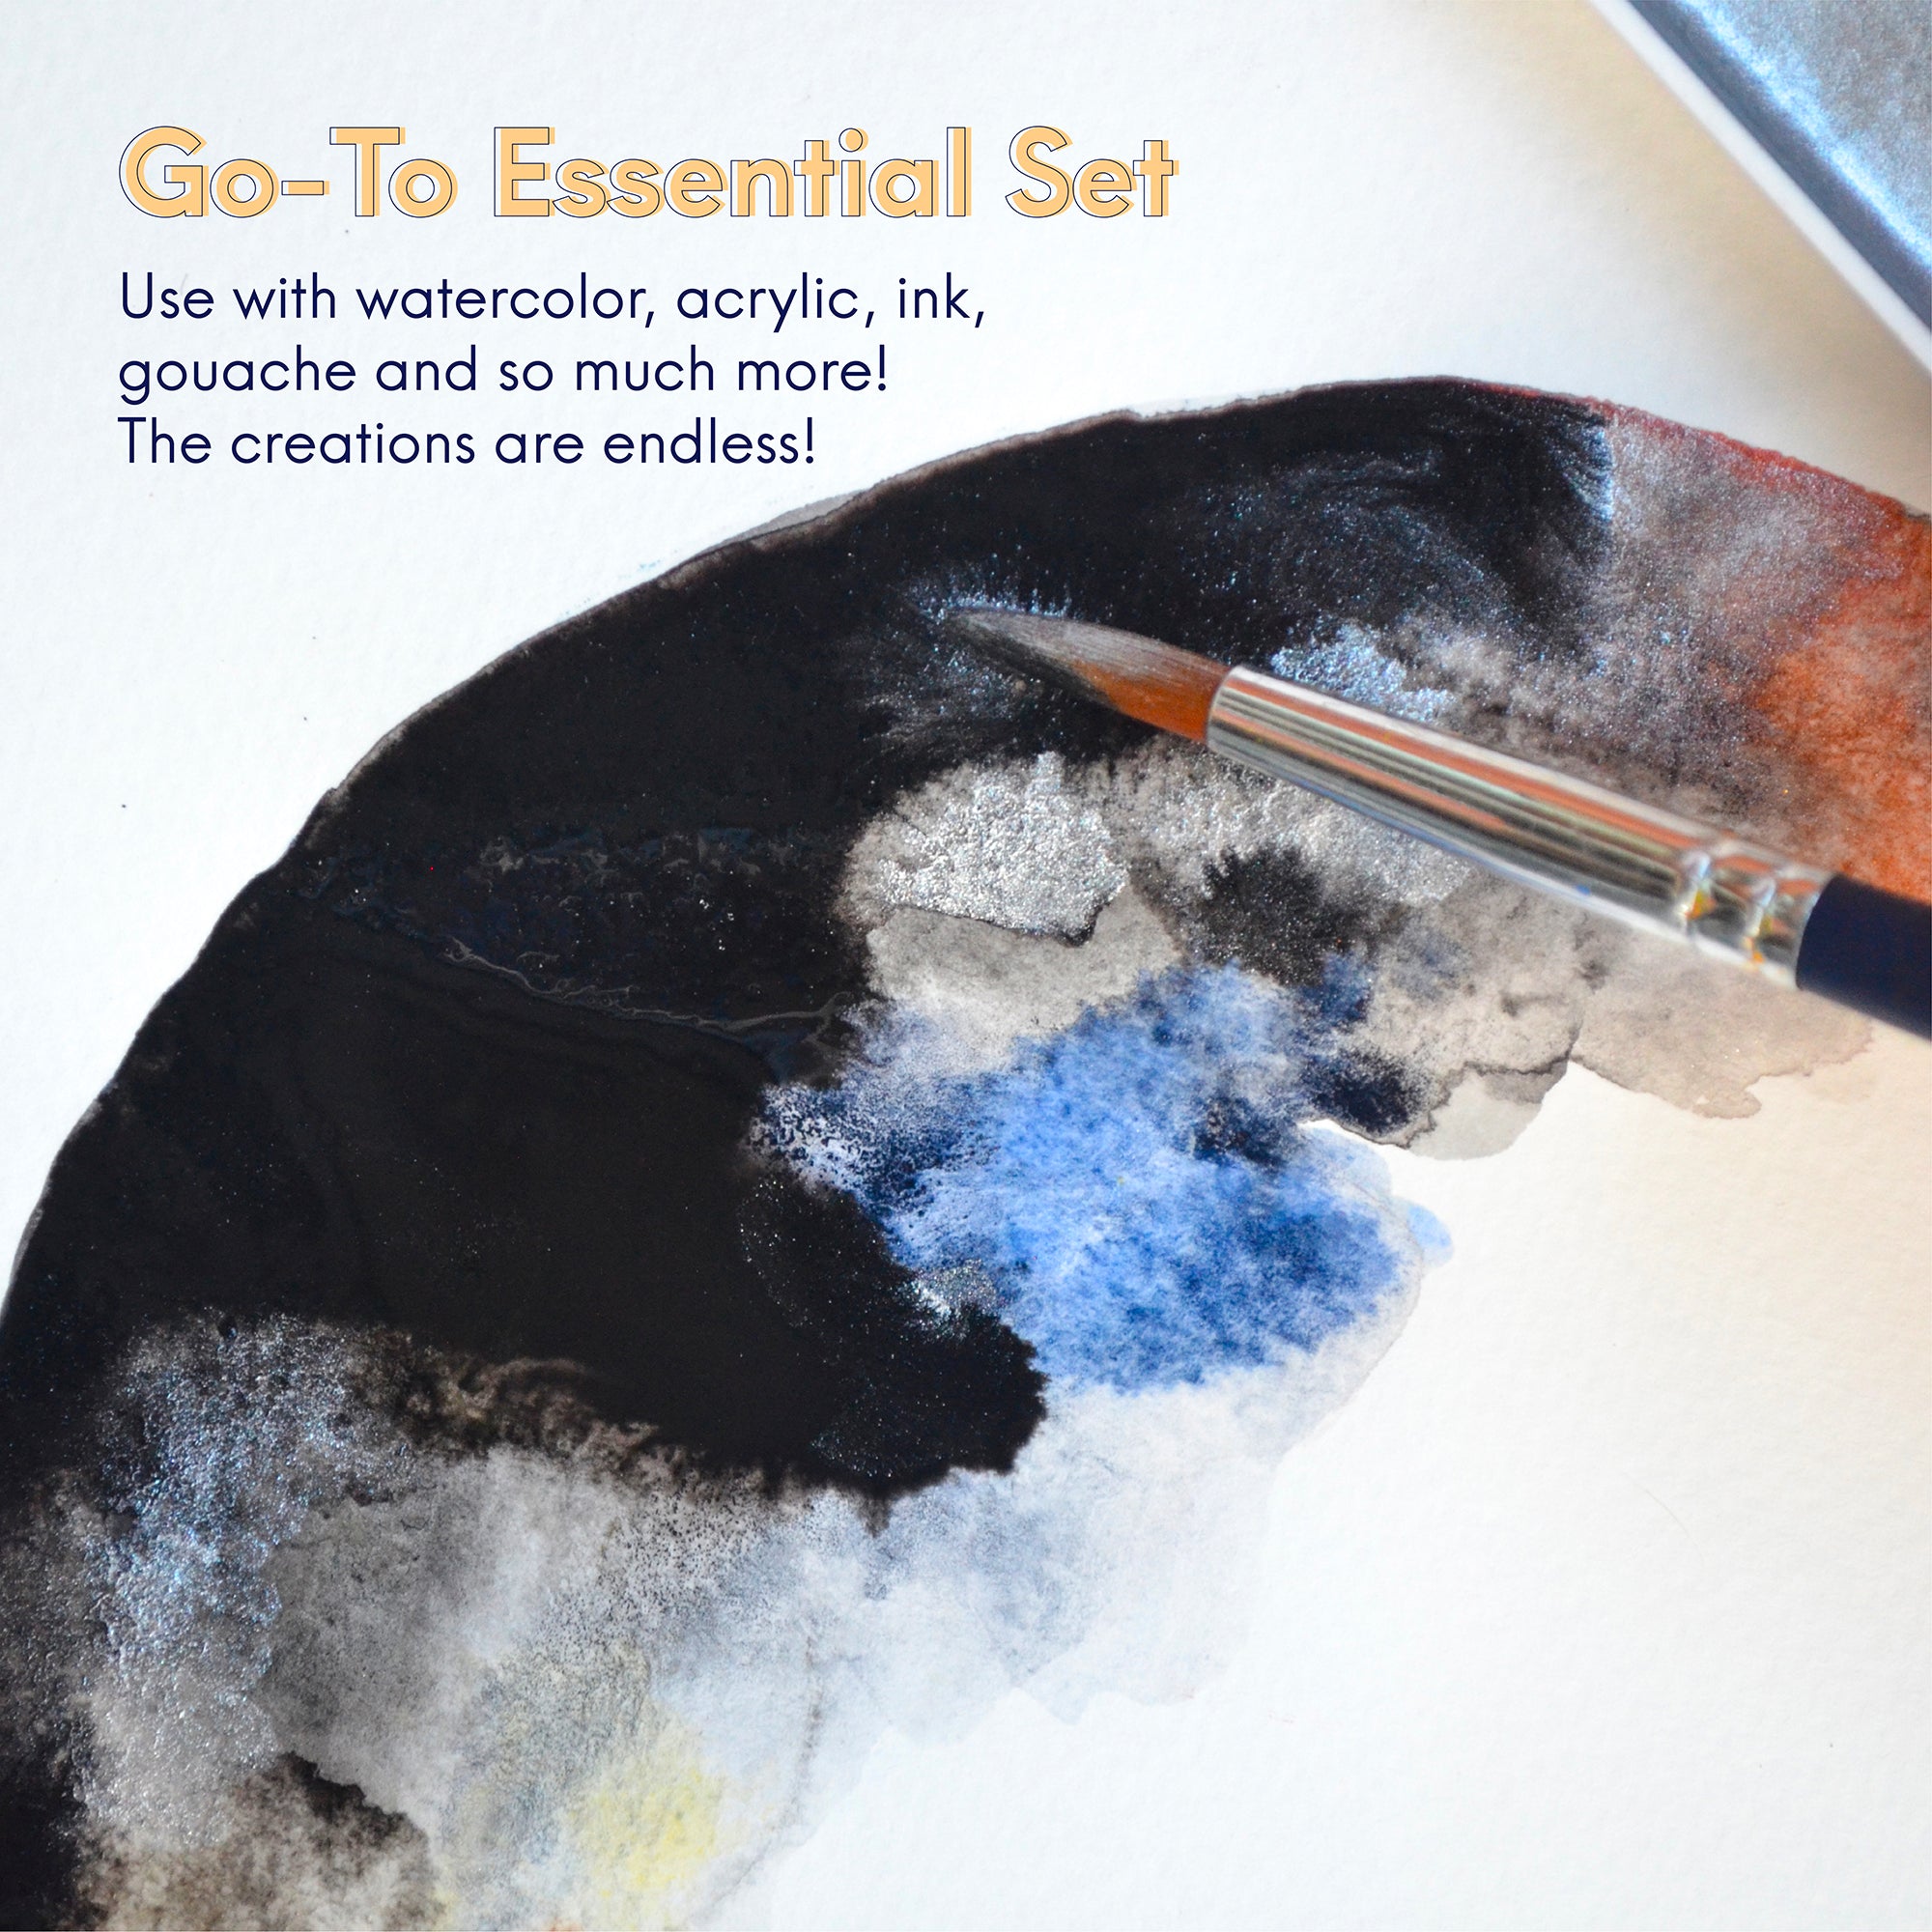 Essential Watercolor Painting Kit